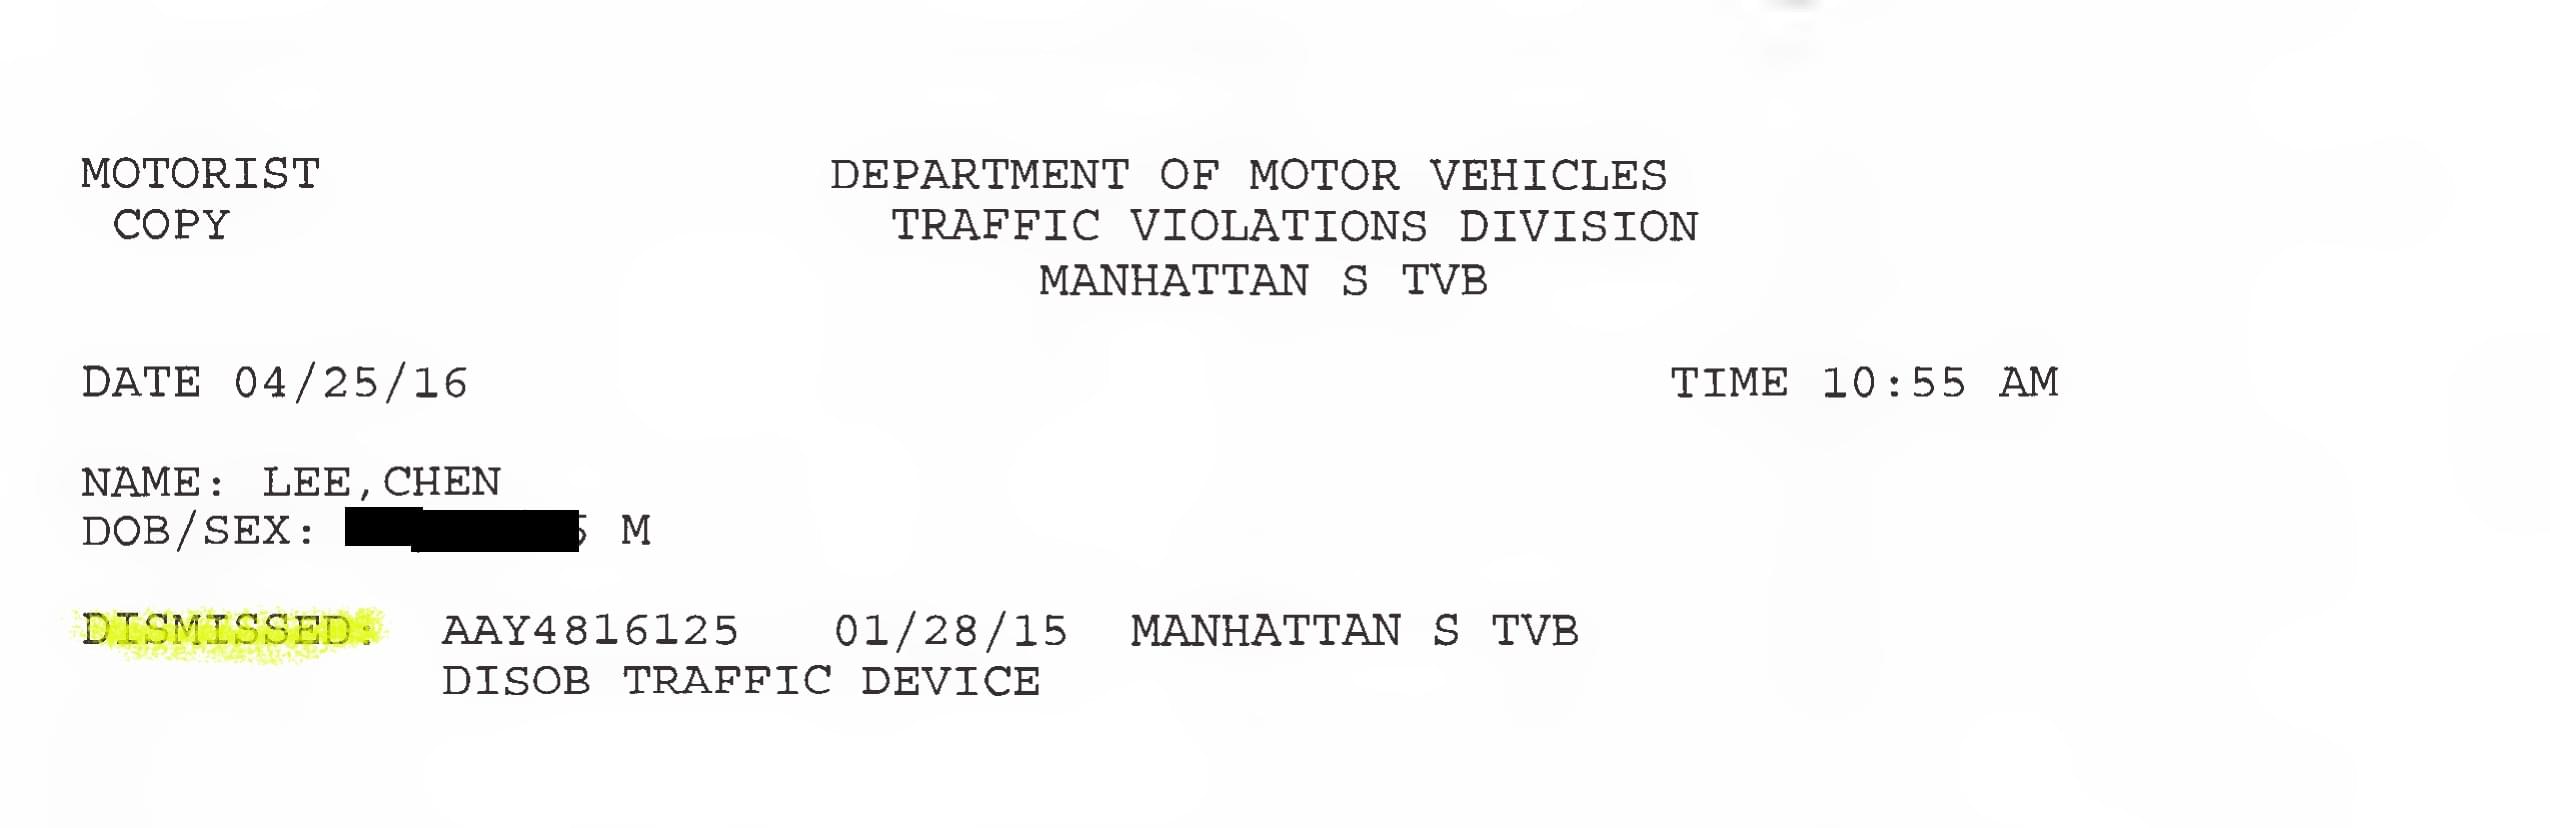 New York Illegal Traffic Device Ticket Dismissed